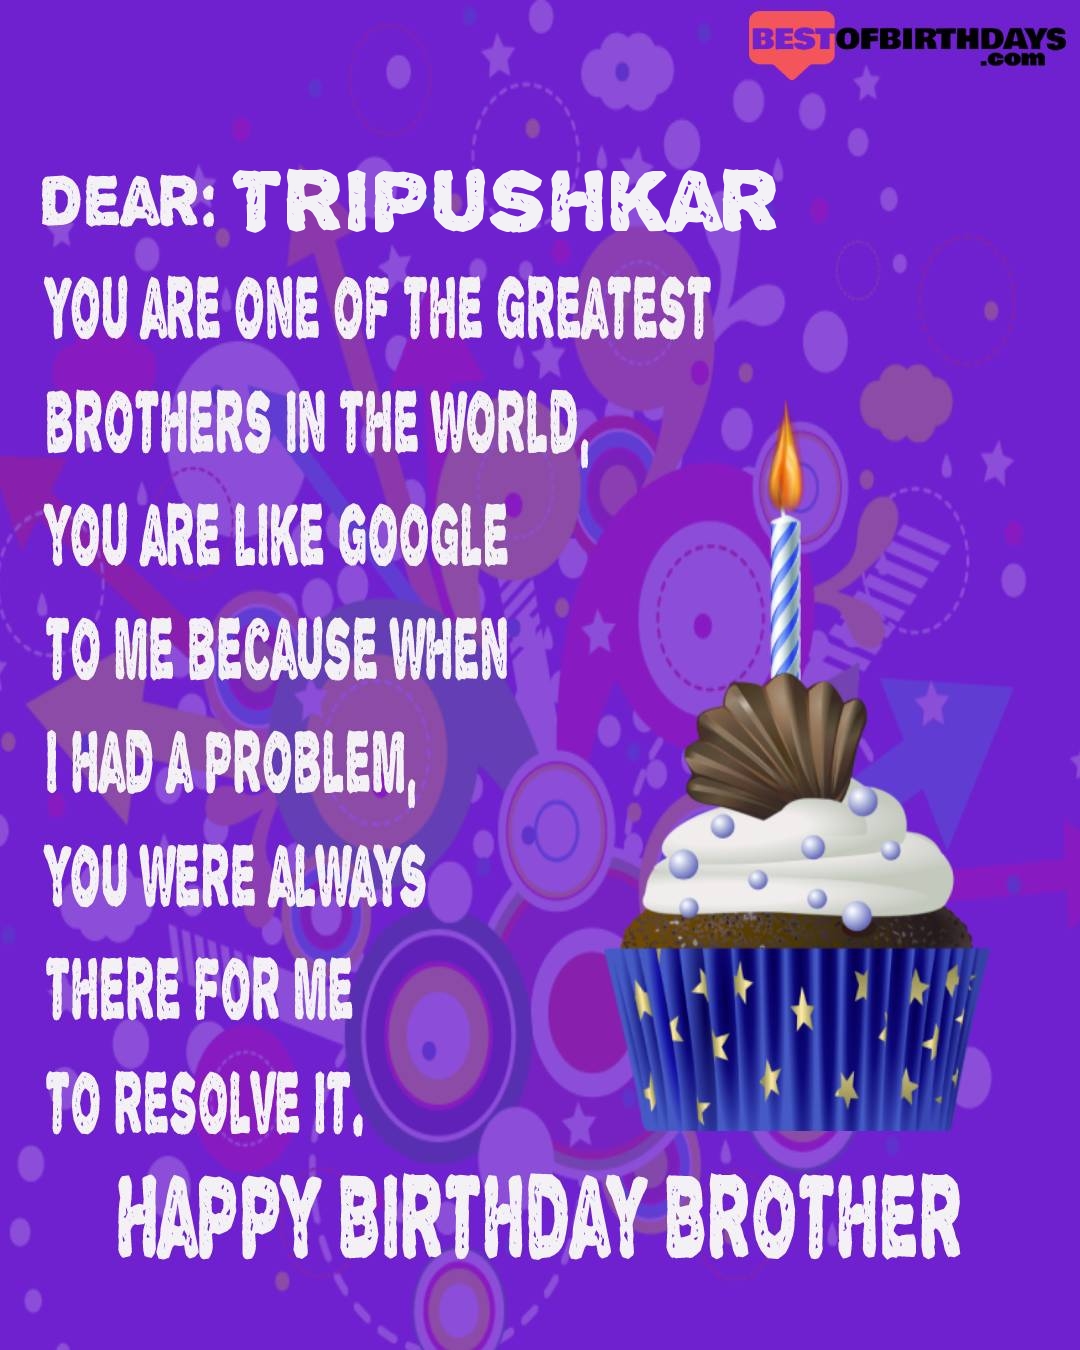 Happy birthday tripushkar bhai brother bro